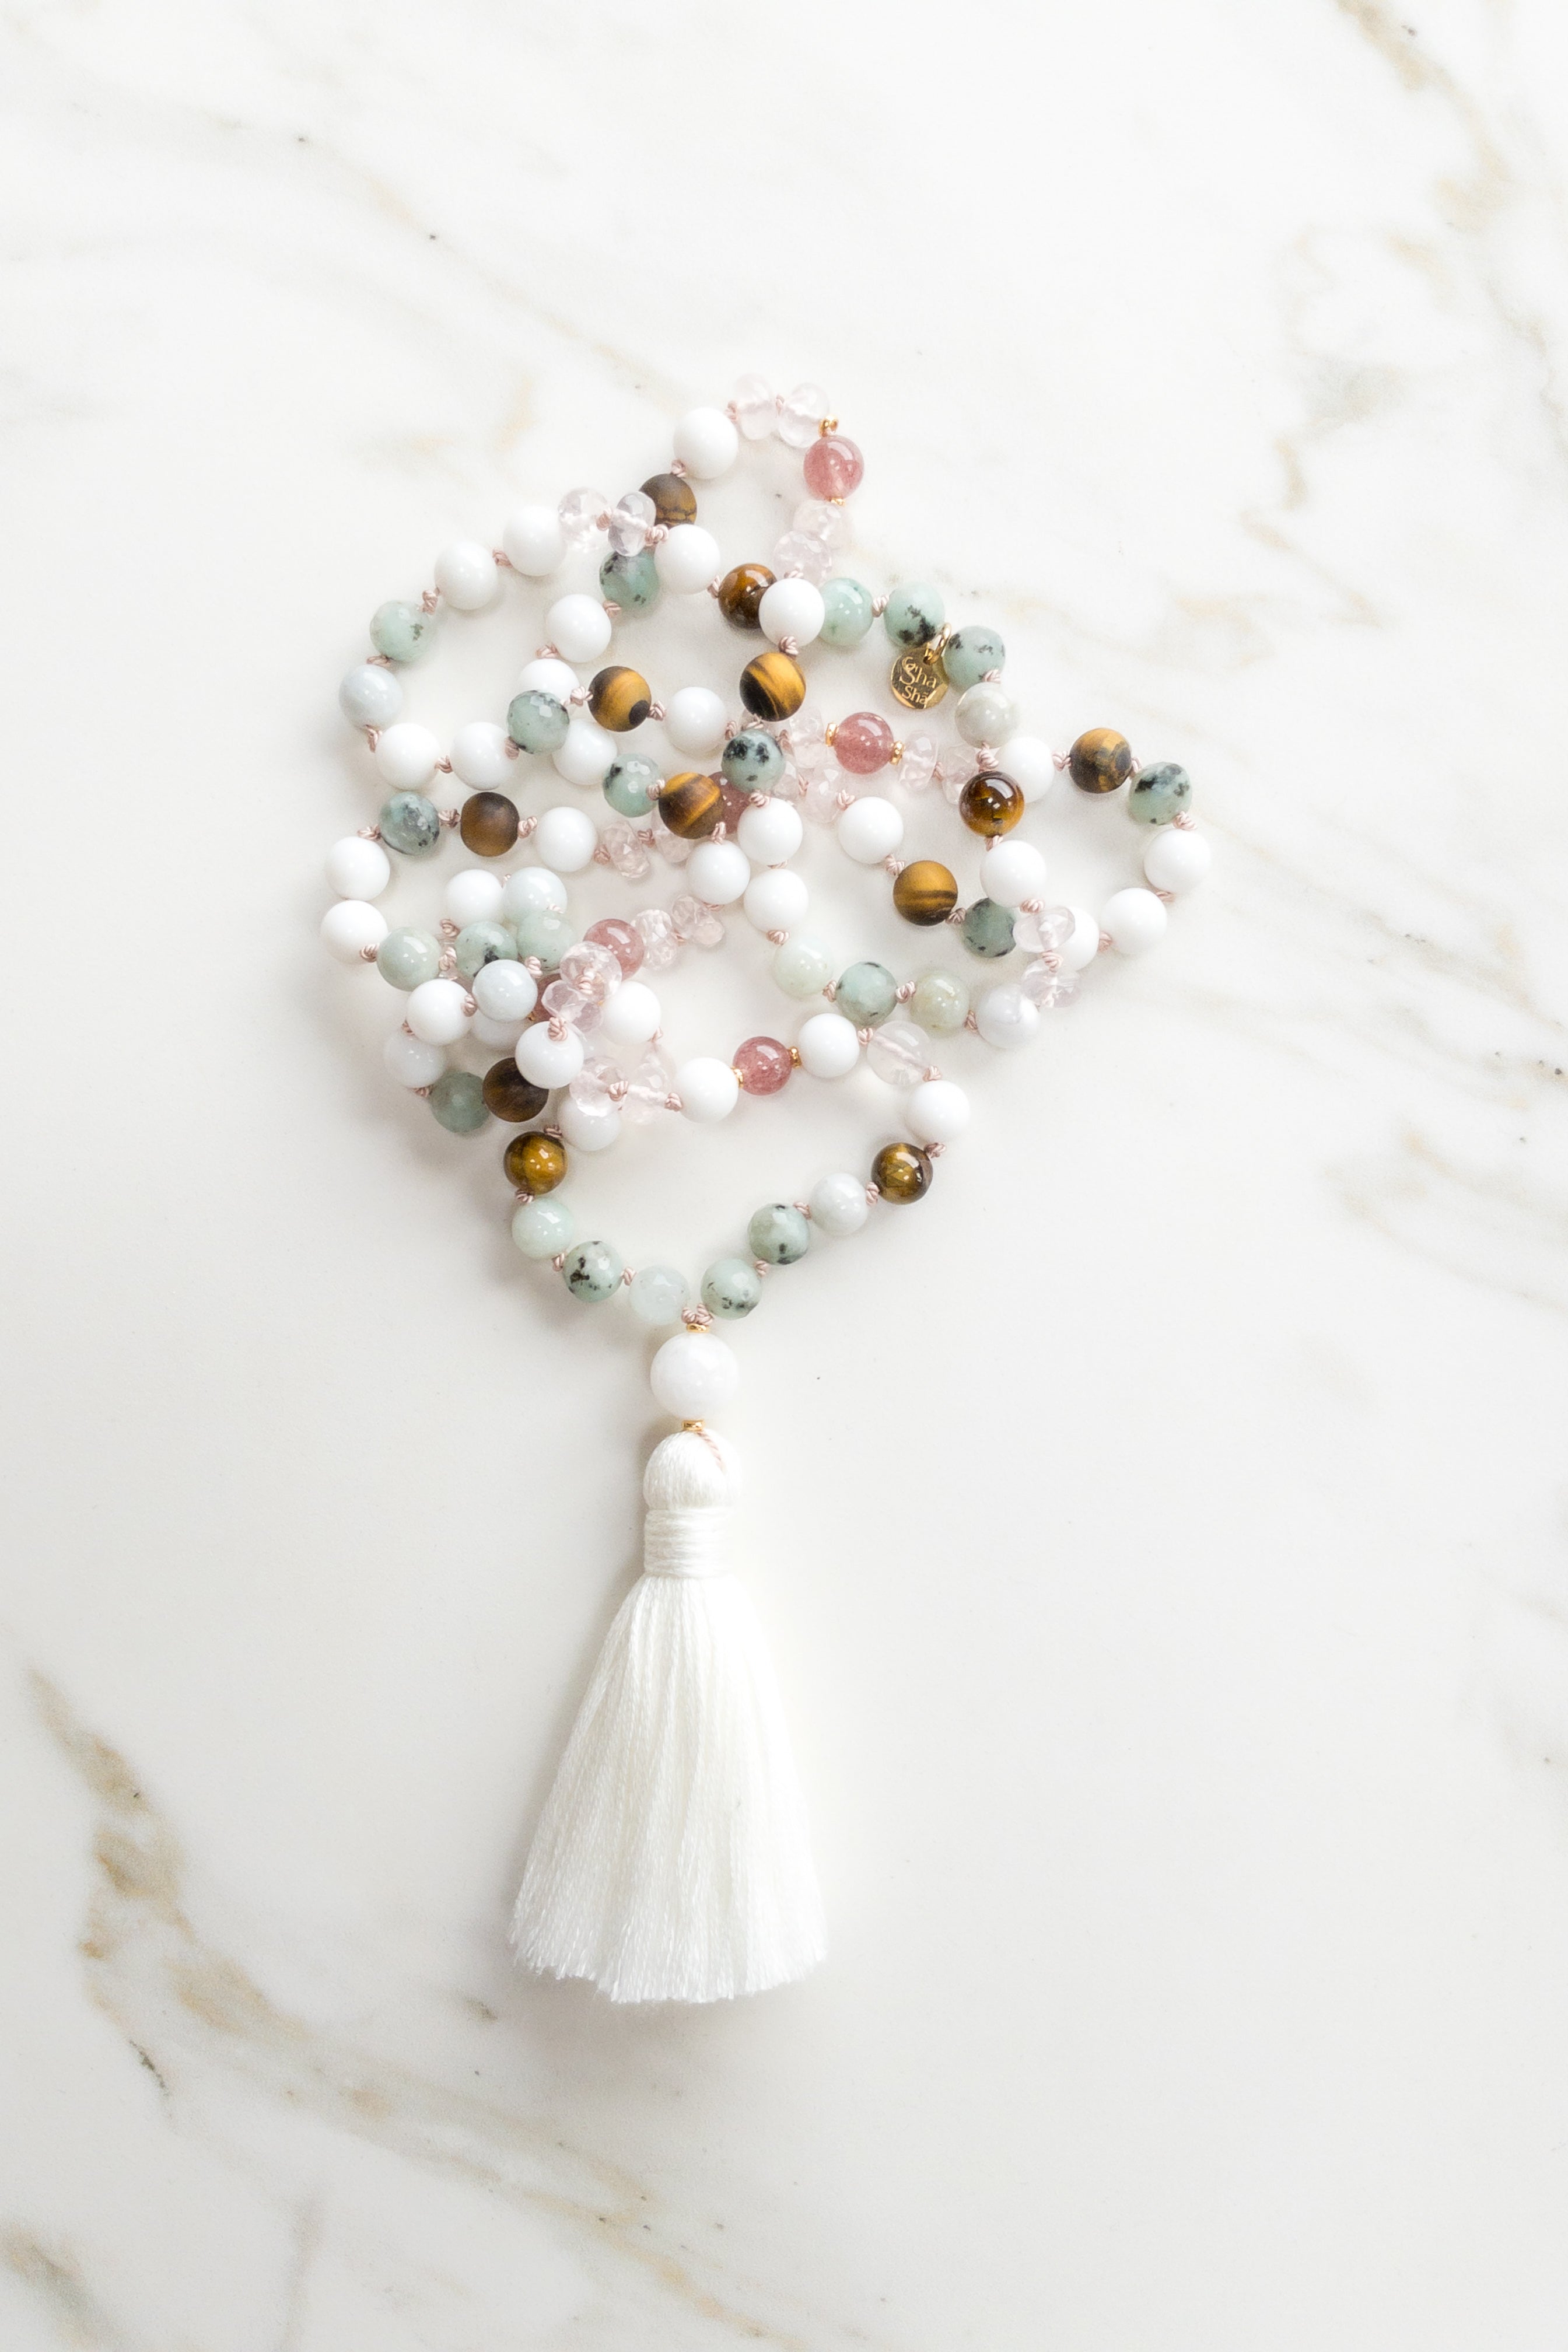 Lotus Serenity japaMala 108 beads - kiwi jasper, pink strawberry quartz, white onyx, tiger eye - OceanEye - ShaShã jewelry Switzerland 